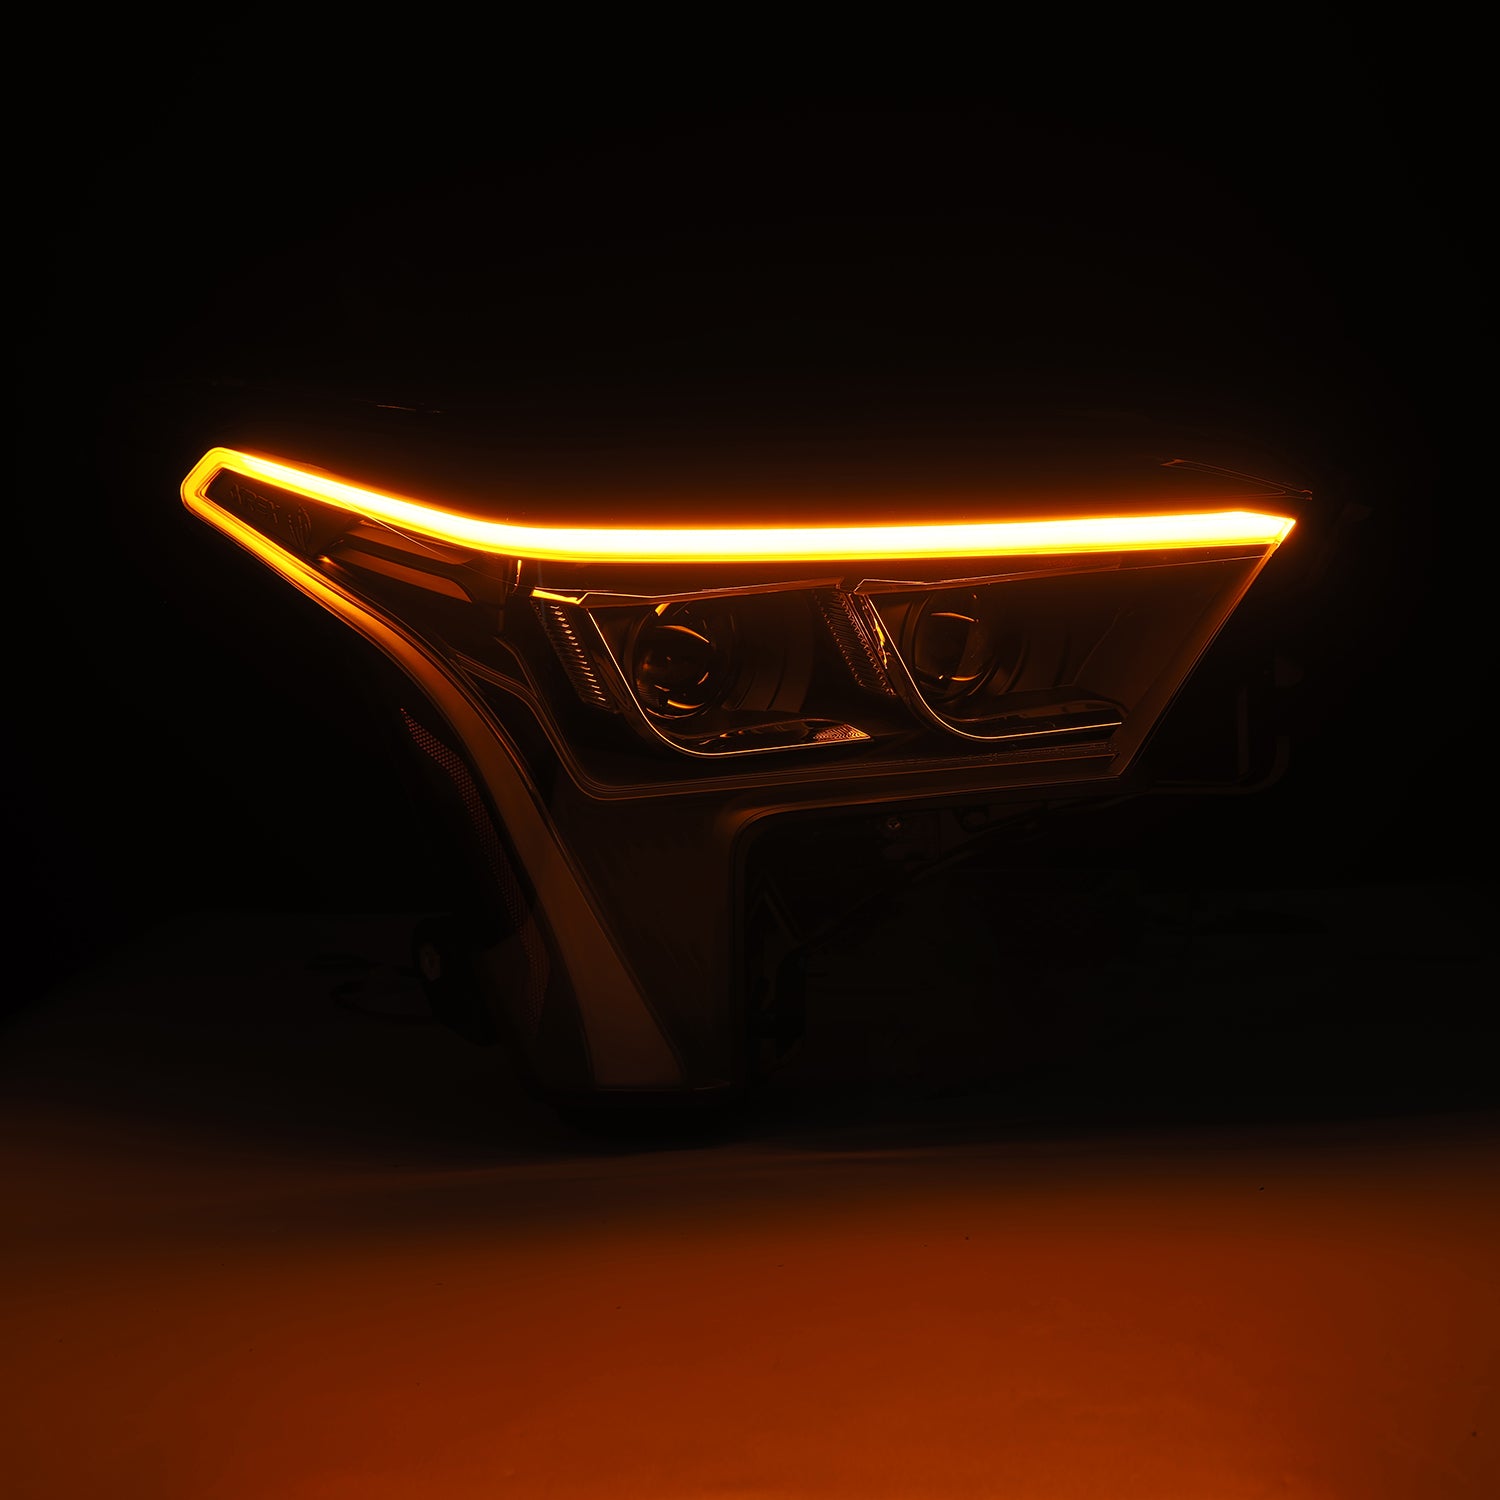 Amber Projector Headlights